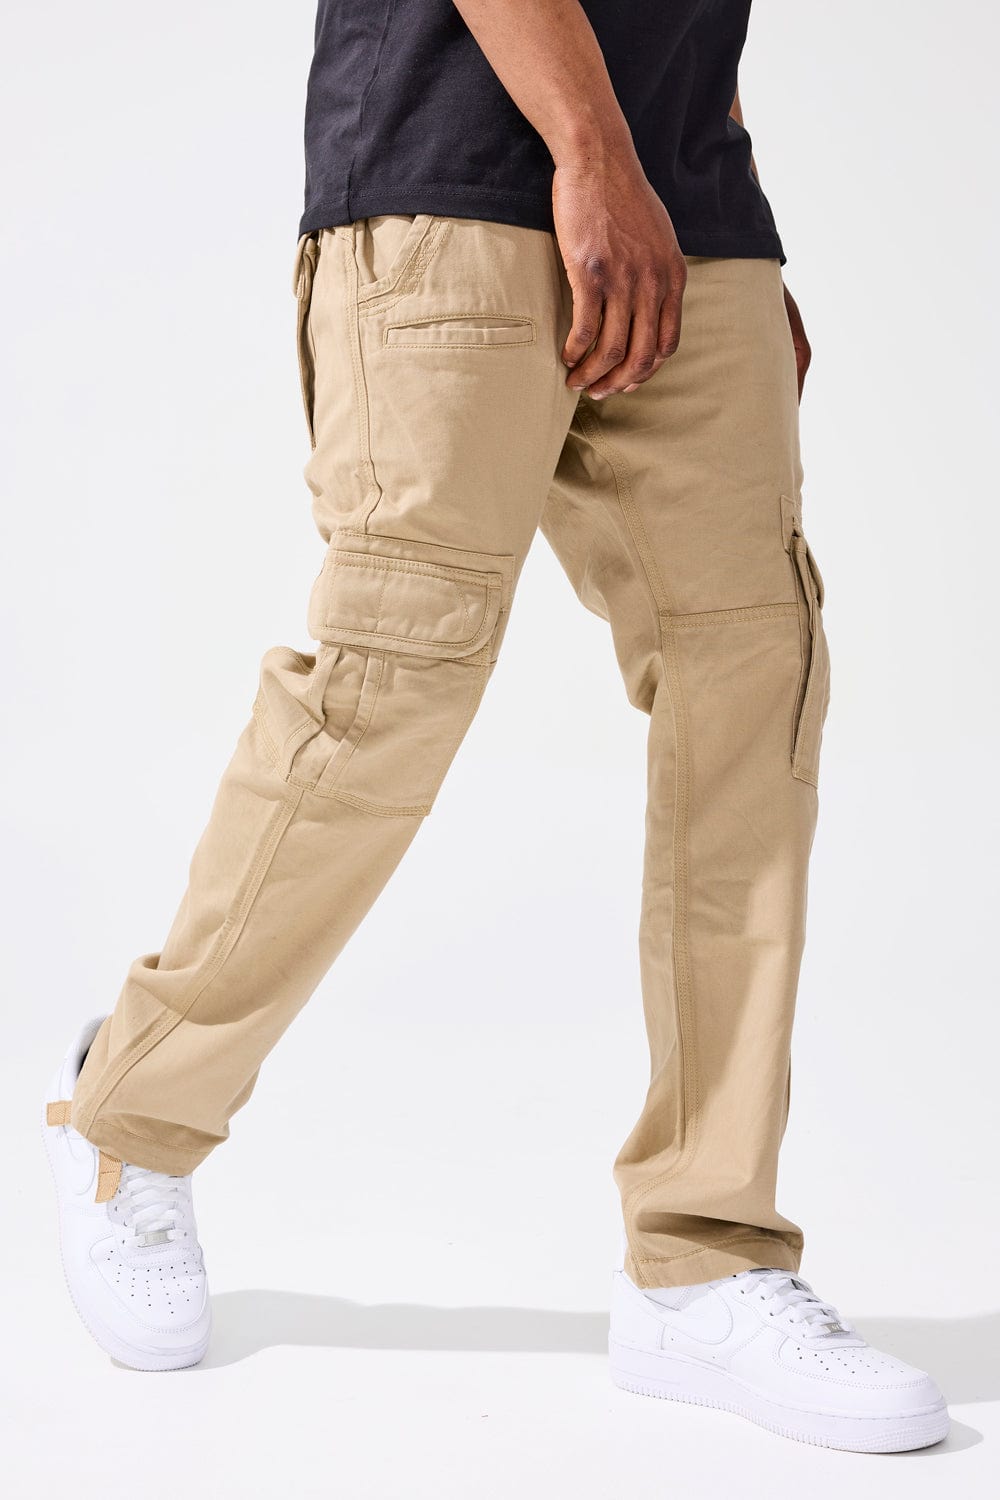 Jordan Craig Xavier - OG Cargo Pants (Khaki)